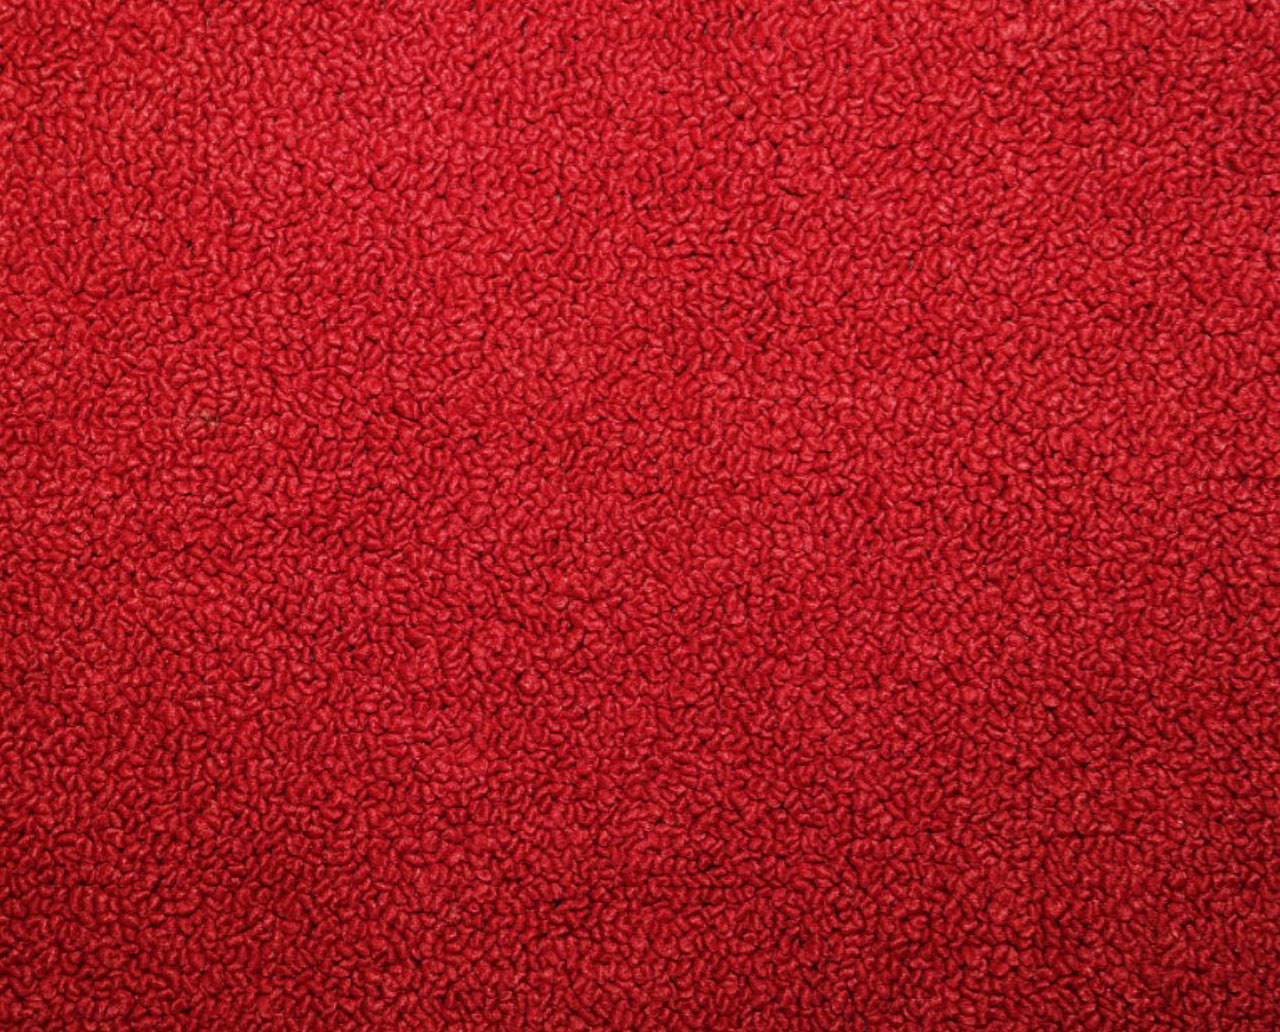 Holden Torana LJ Torana S Sedan 42D Calypso Red Carpet (Image 1 of 1)